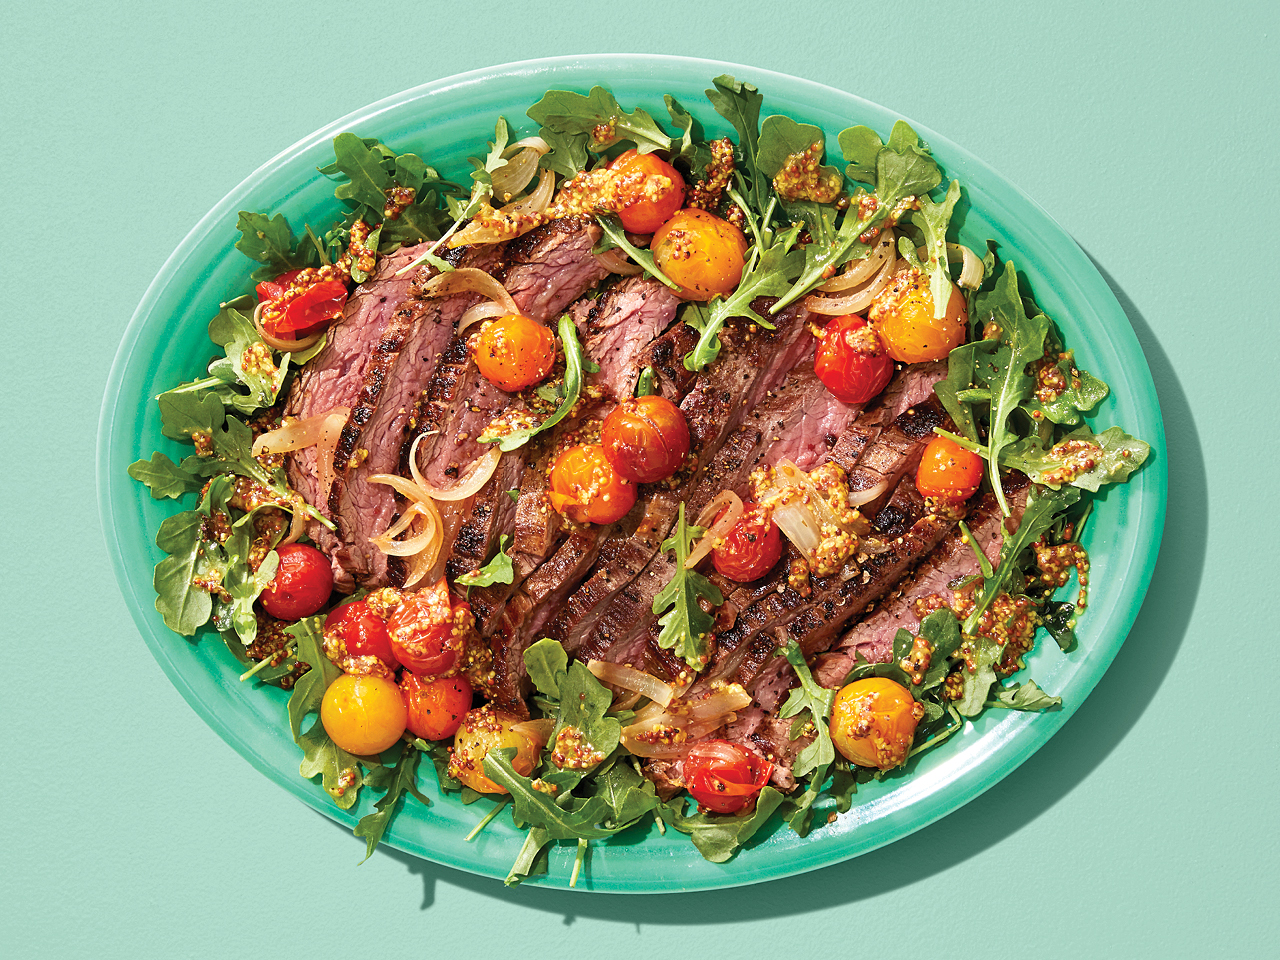 Steak and Arugula Salad with Warm Tomato Dressing